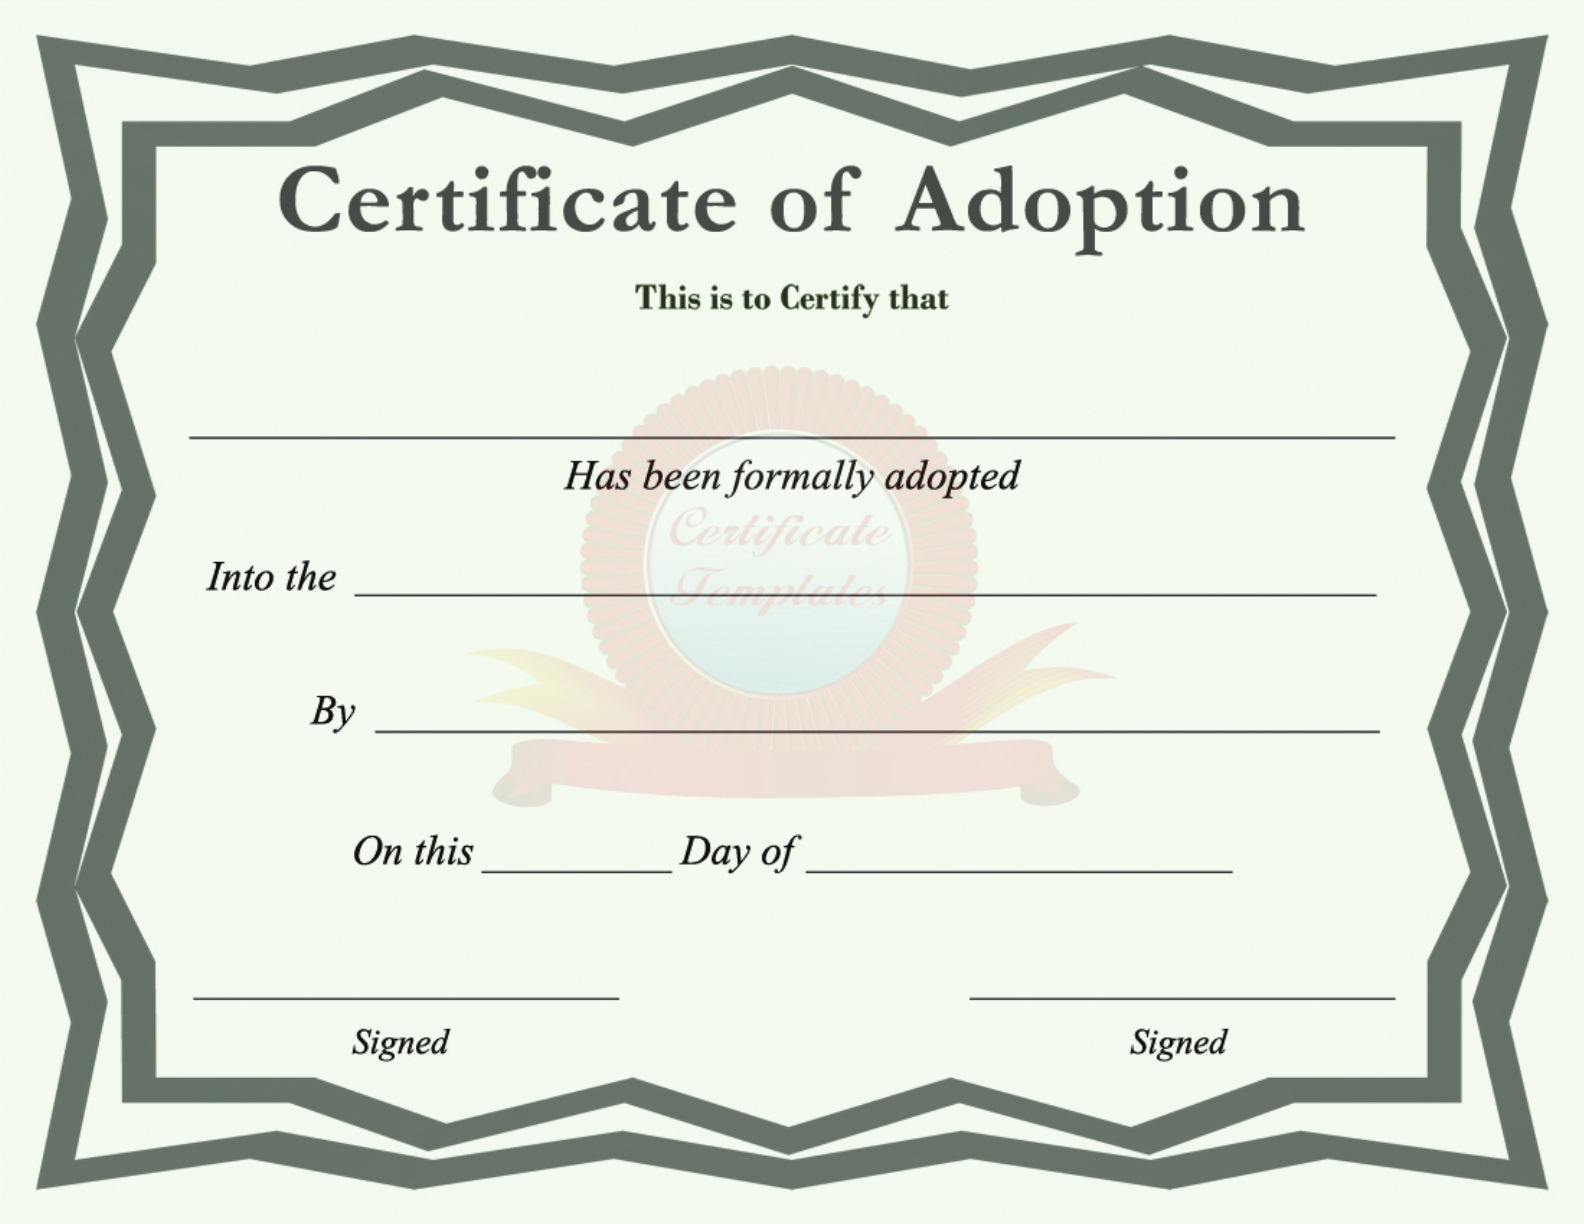 Certificate of Adoption